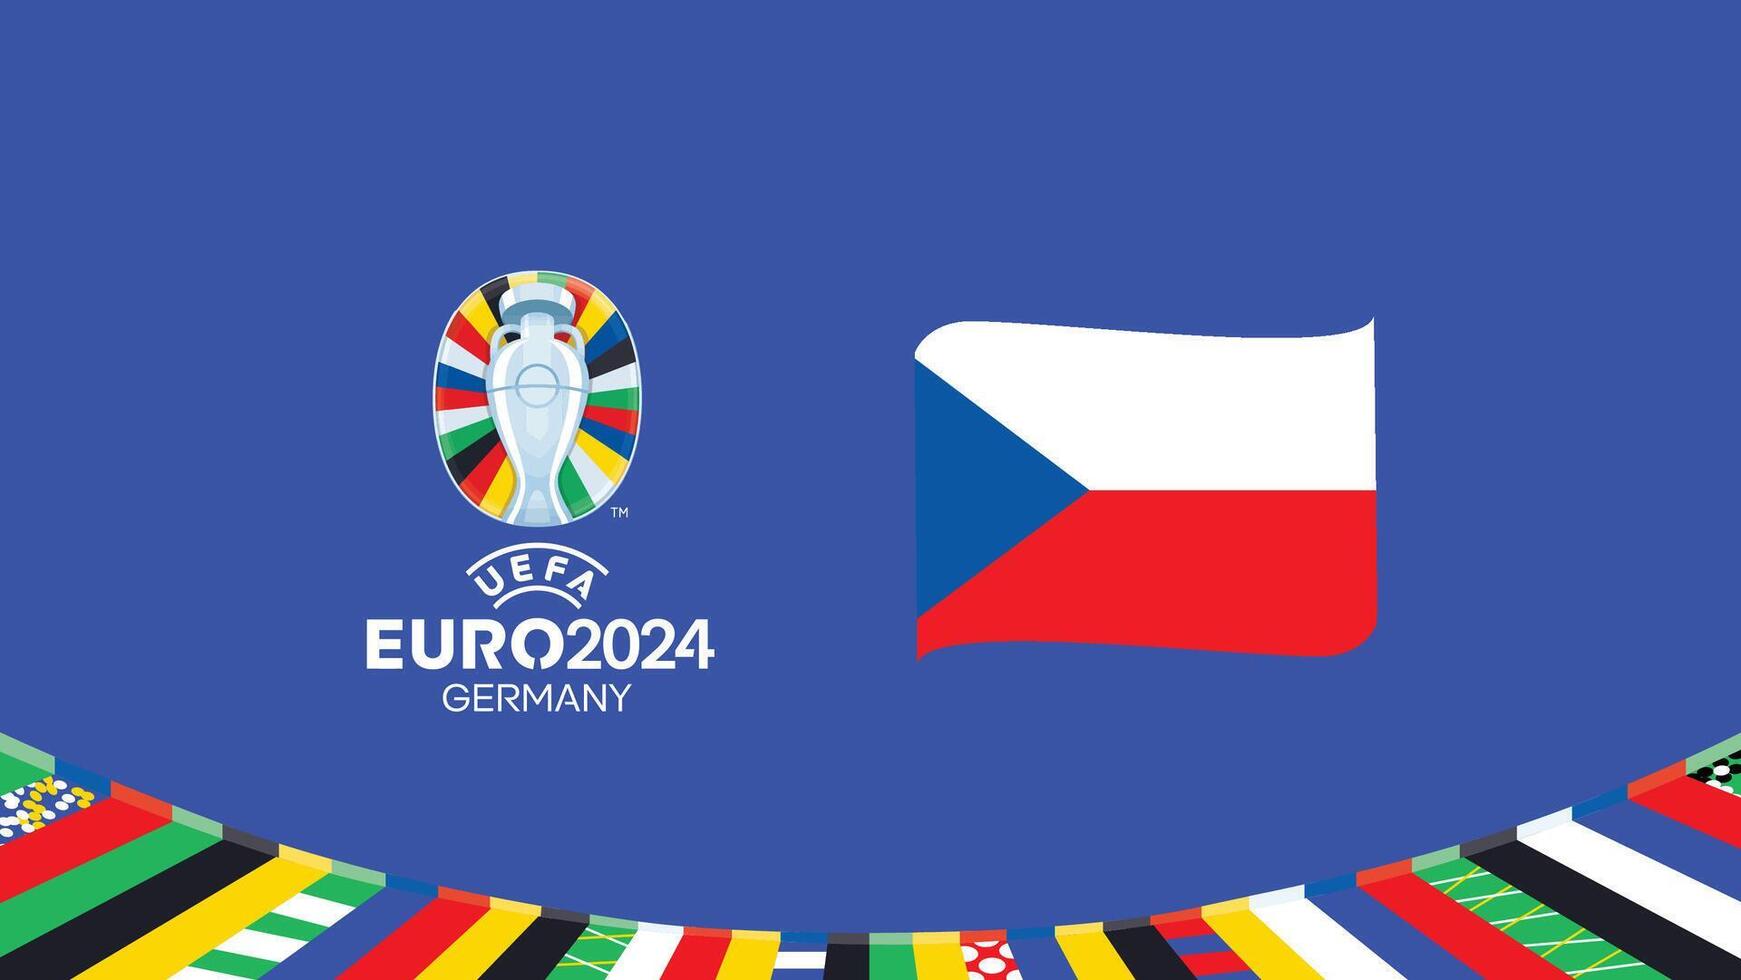 Euro 2024 Czechia Emblem Ribbon Teams Design With Official Symbol Logo Abstract Countries European Football Illustration vector